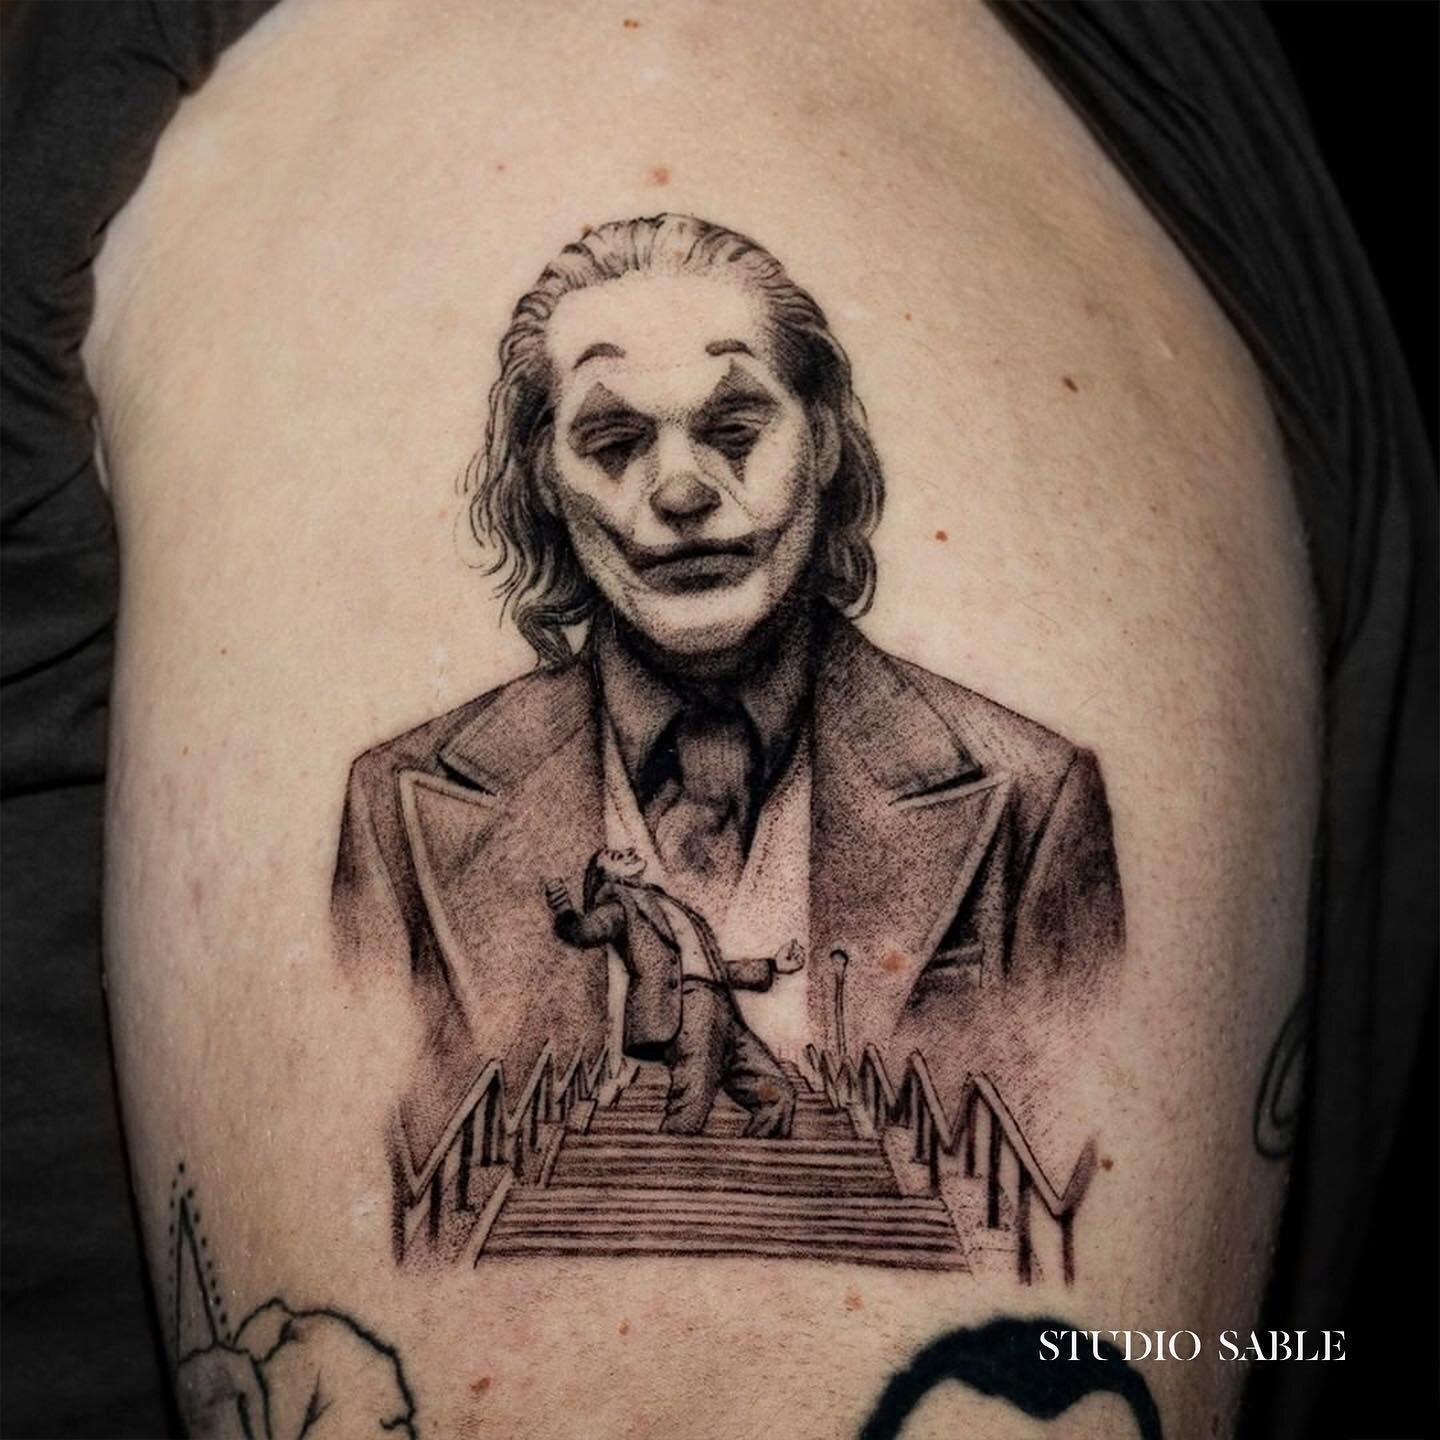 The Joker by @jimburgman 🃏
.
.
.
#smalltattoo #tinytattoo #microtattoo #cutetattoo #detailedtattoo #amsterdamtattoo #realismtattoo #darksurrealism #surrealtattoo #3rlonly #dotworktattoos #finelinetattoos #tattooinspiration #3rl #surrealistic #darkar